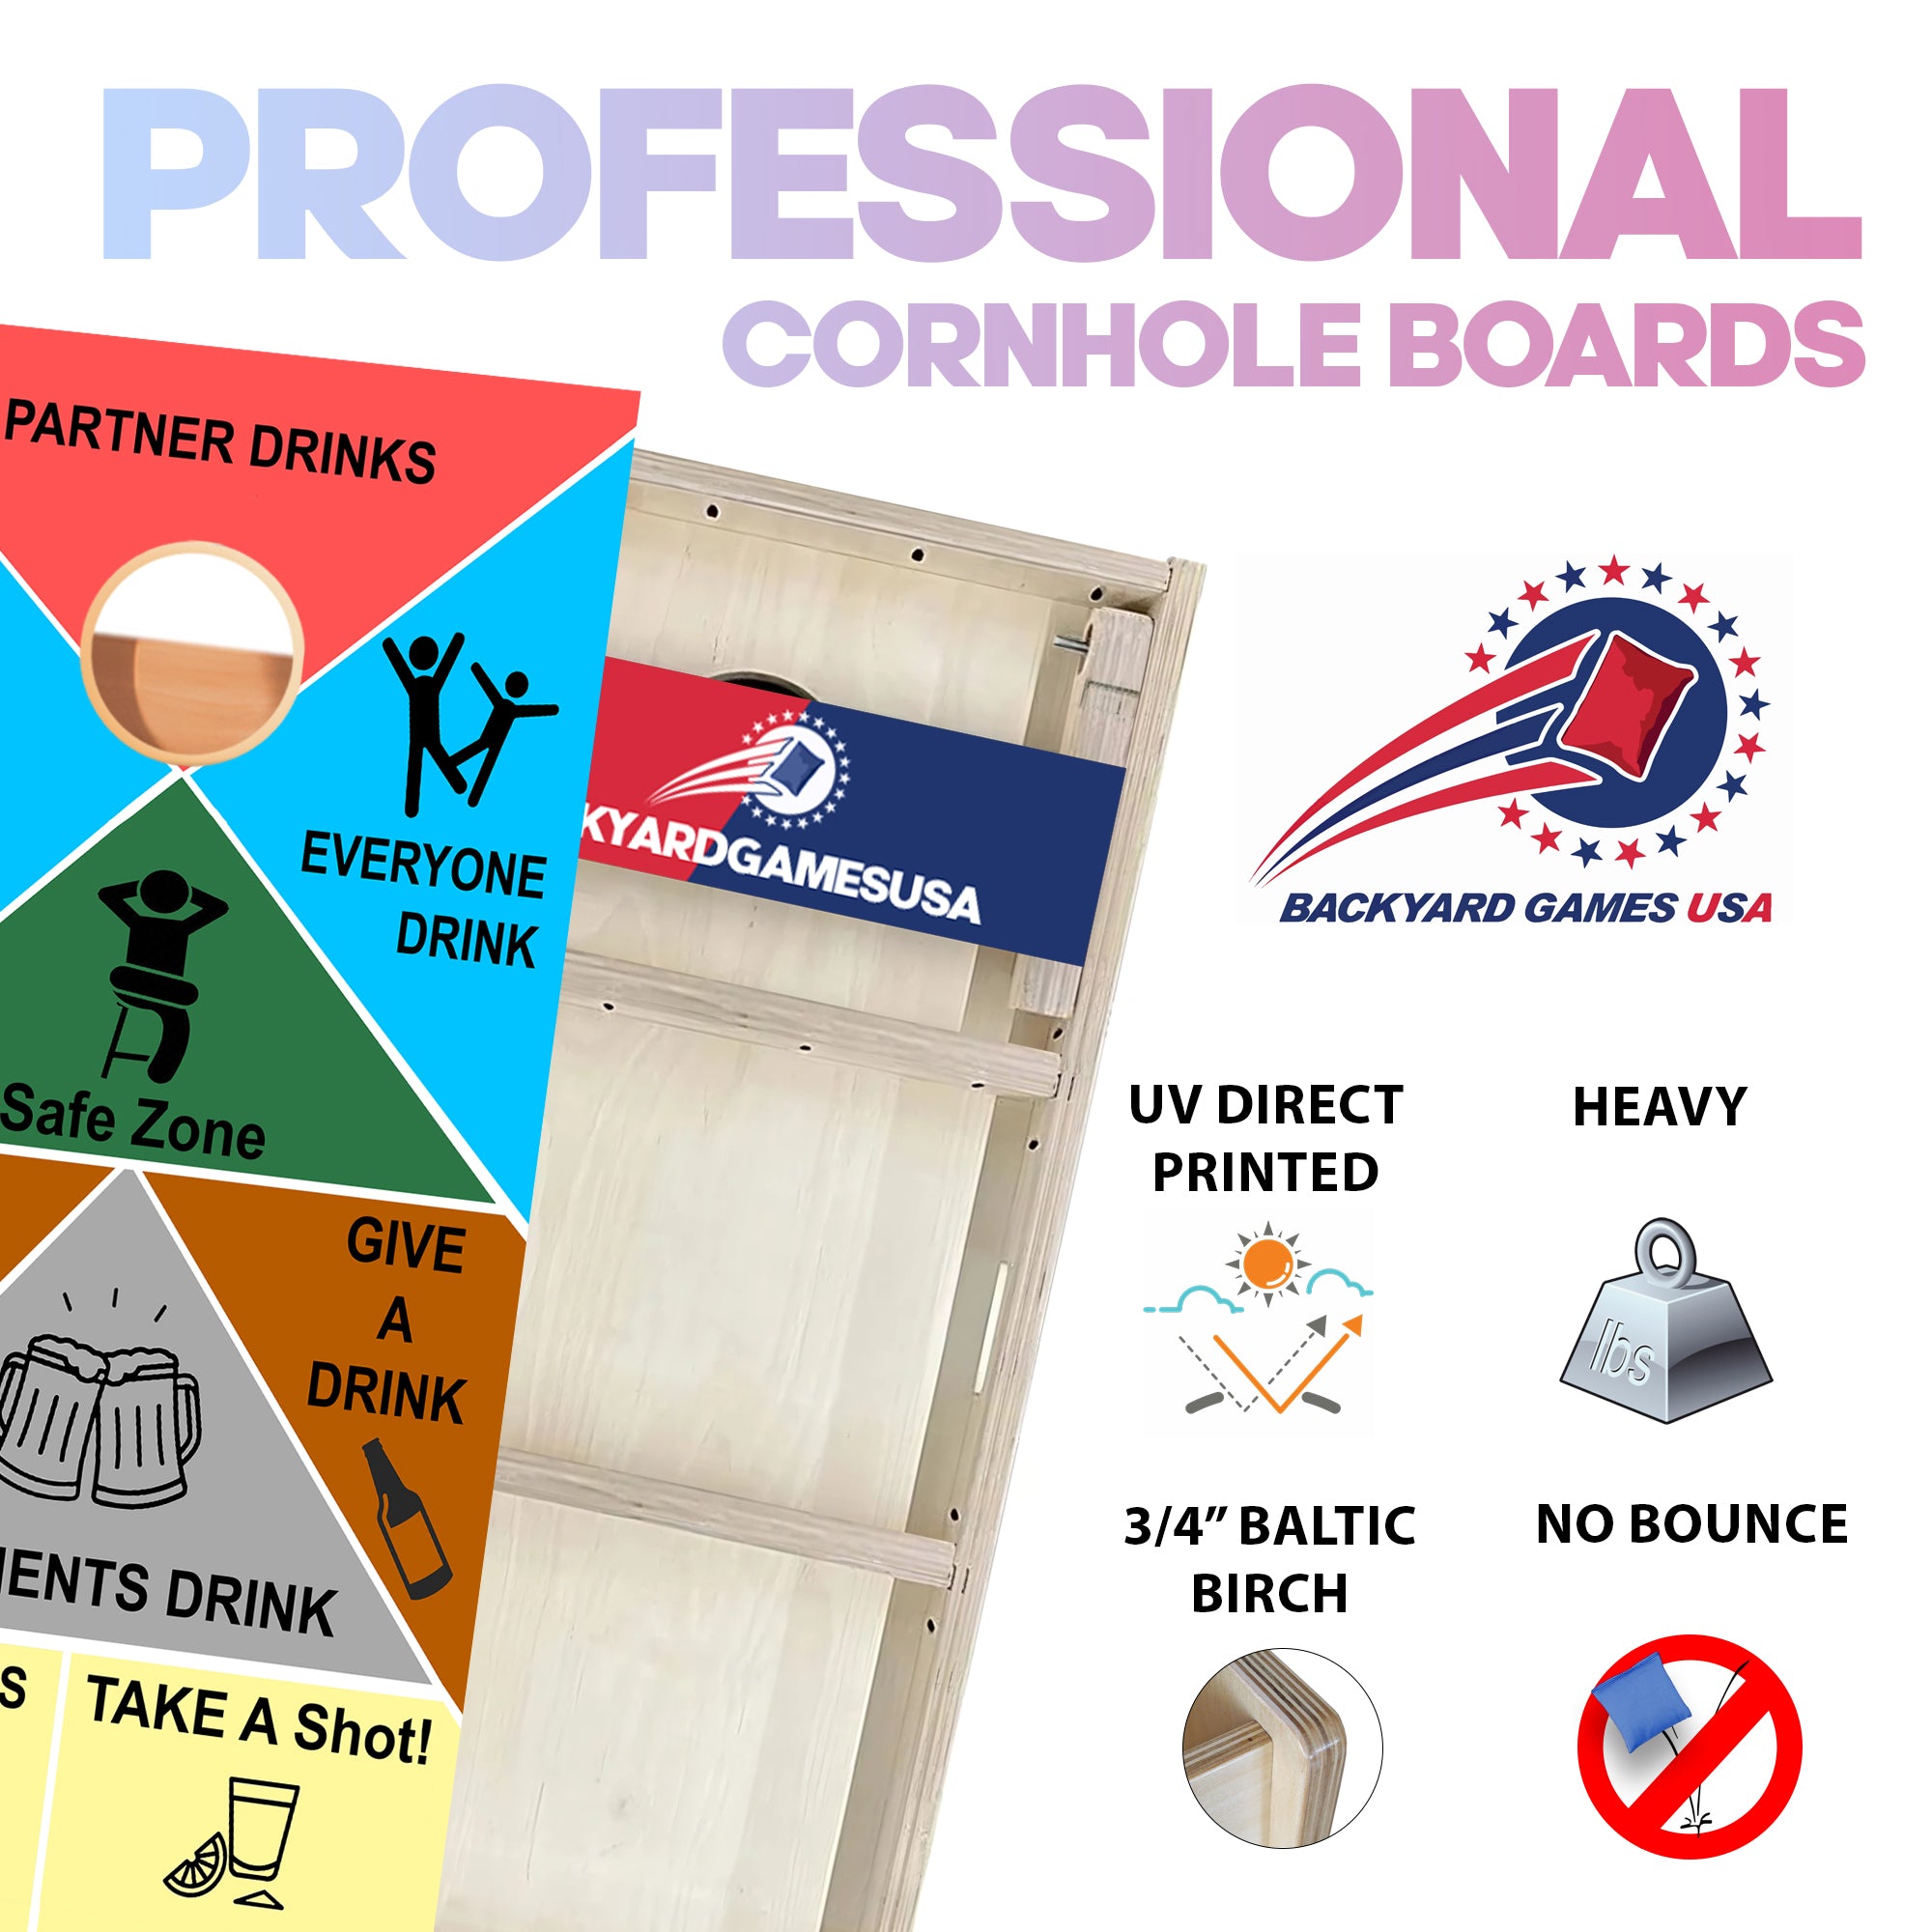 Classic Drink Professional Cornhole Boards